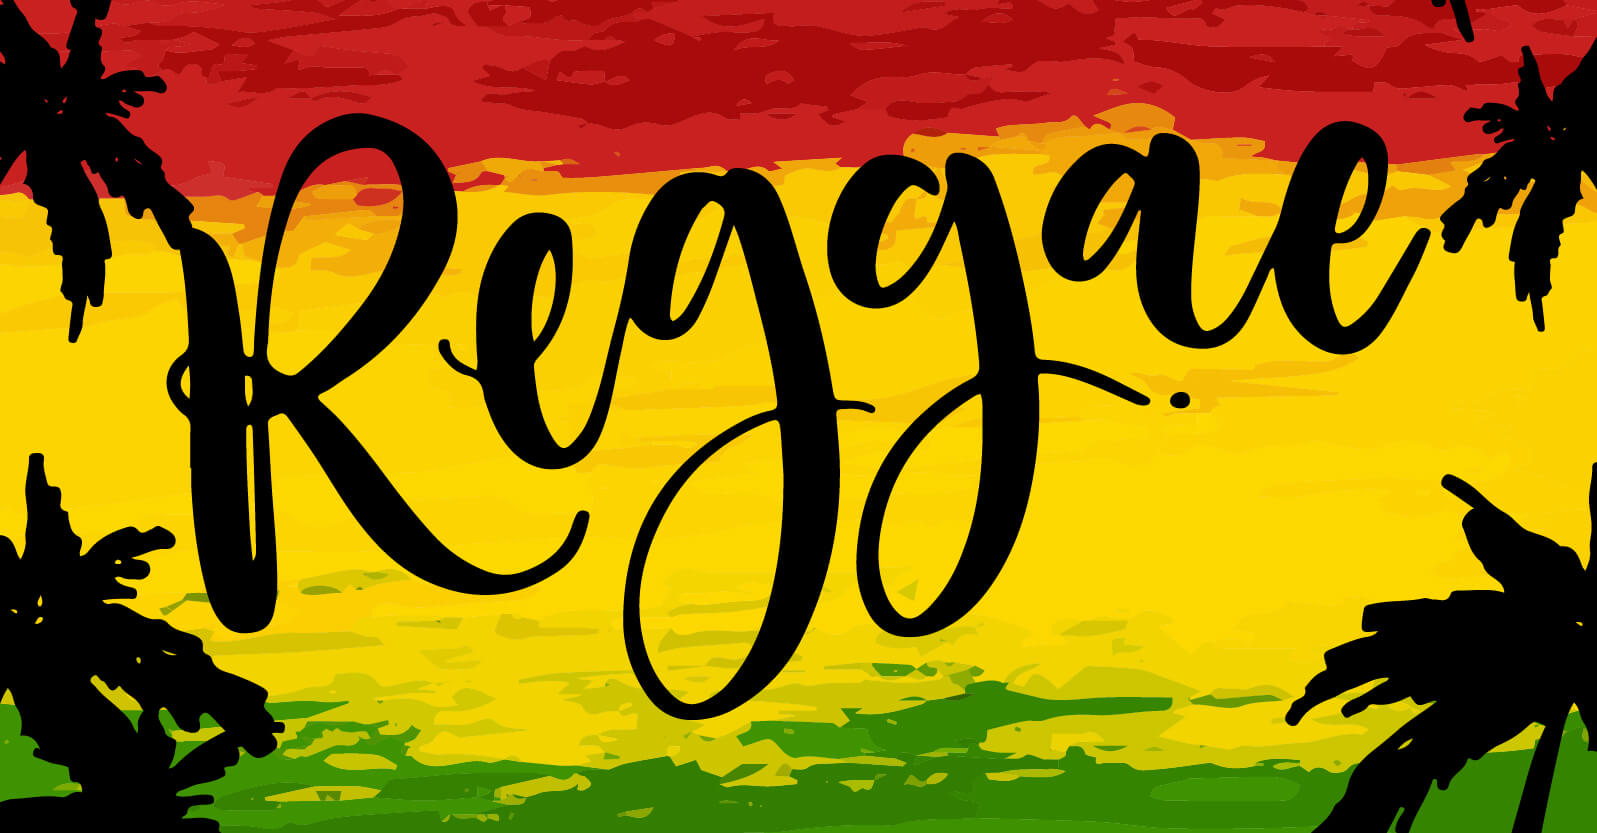 short essay about reggae music